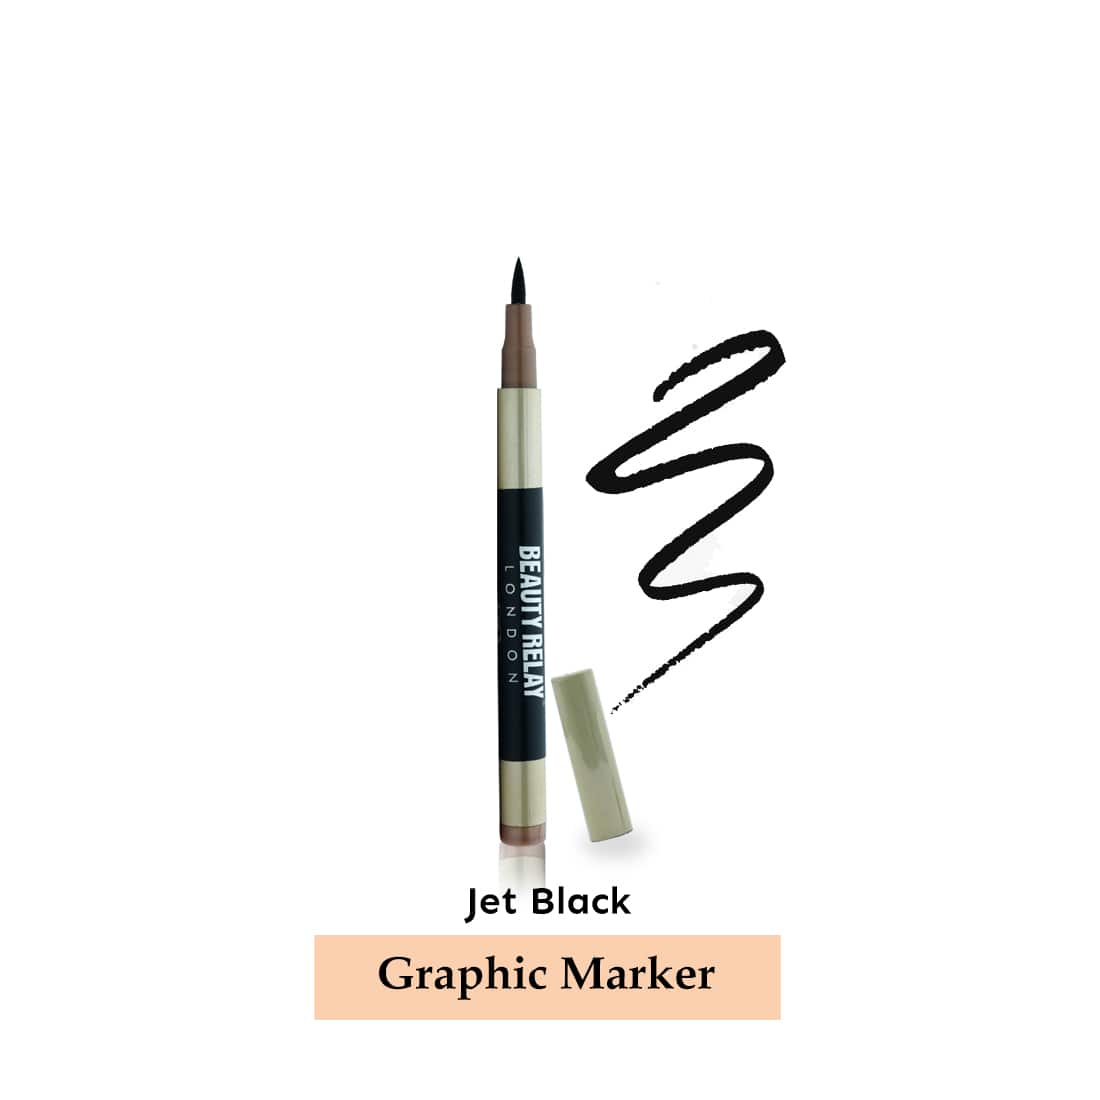 Graphic Marker